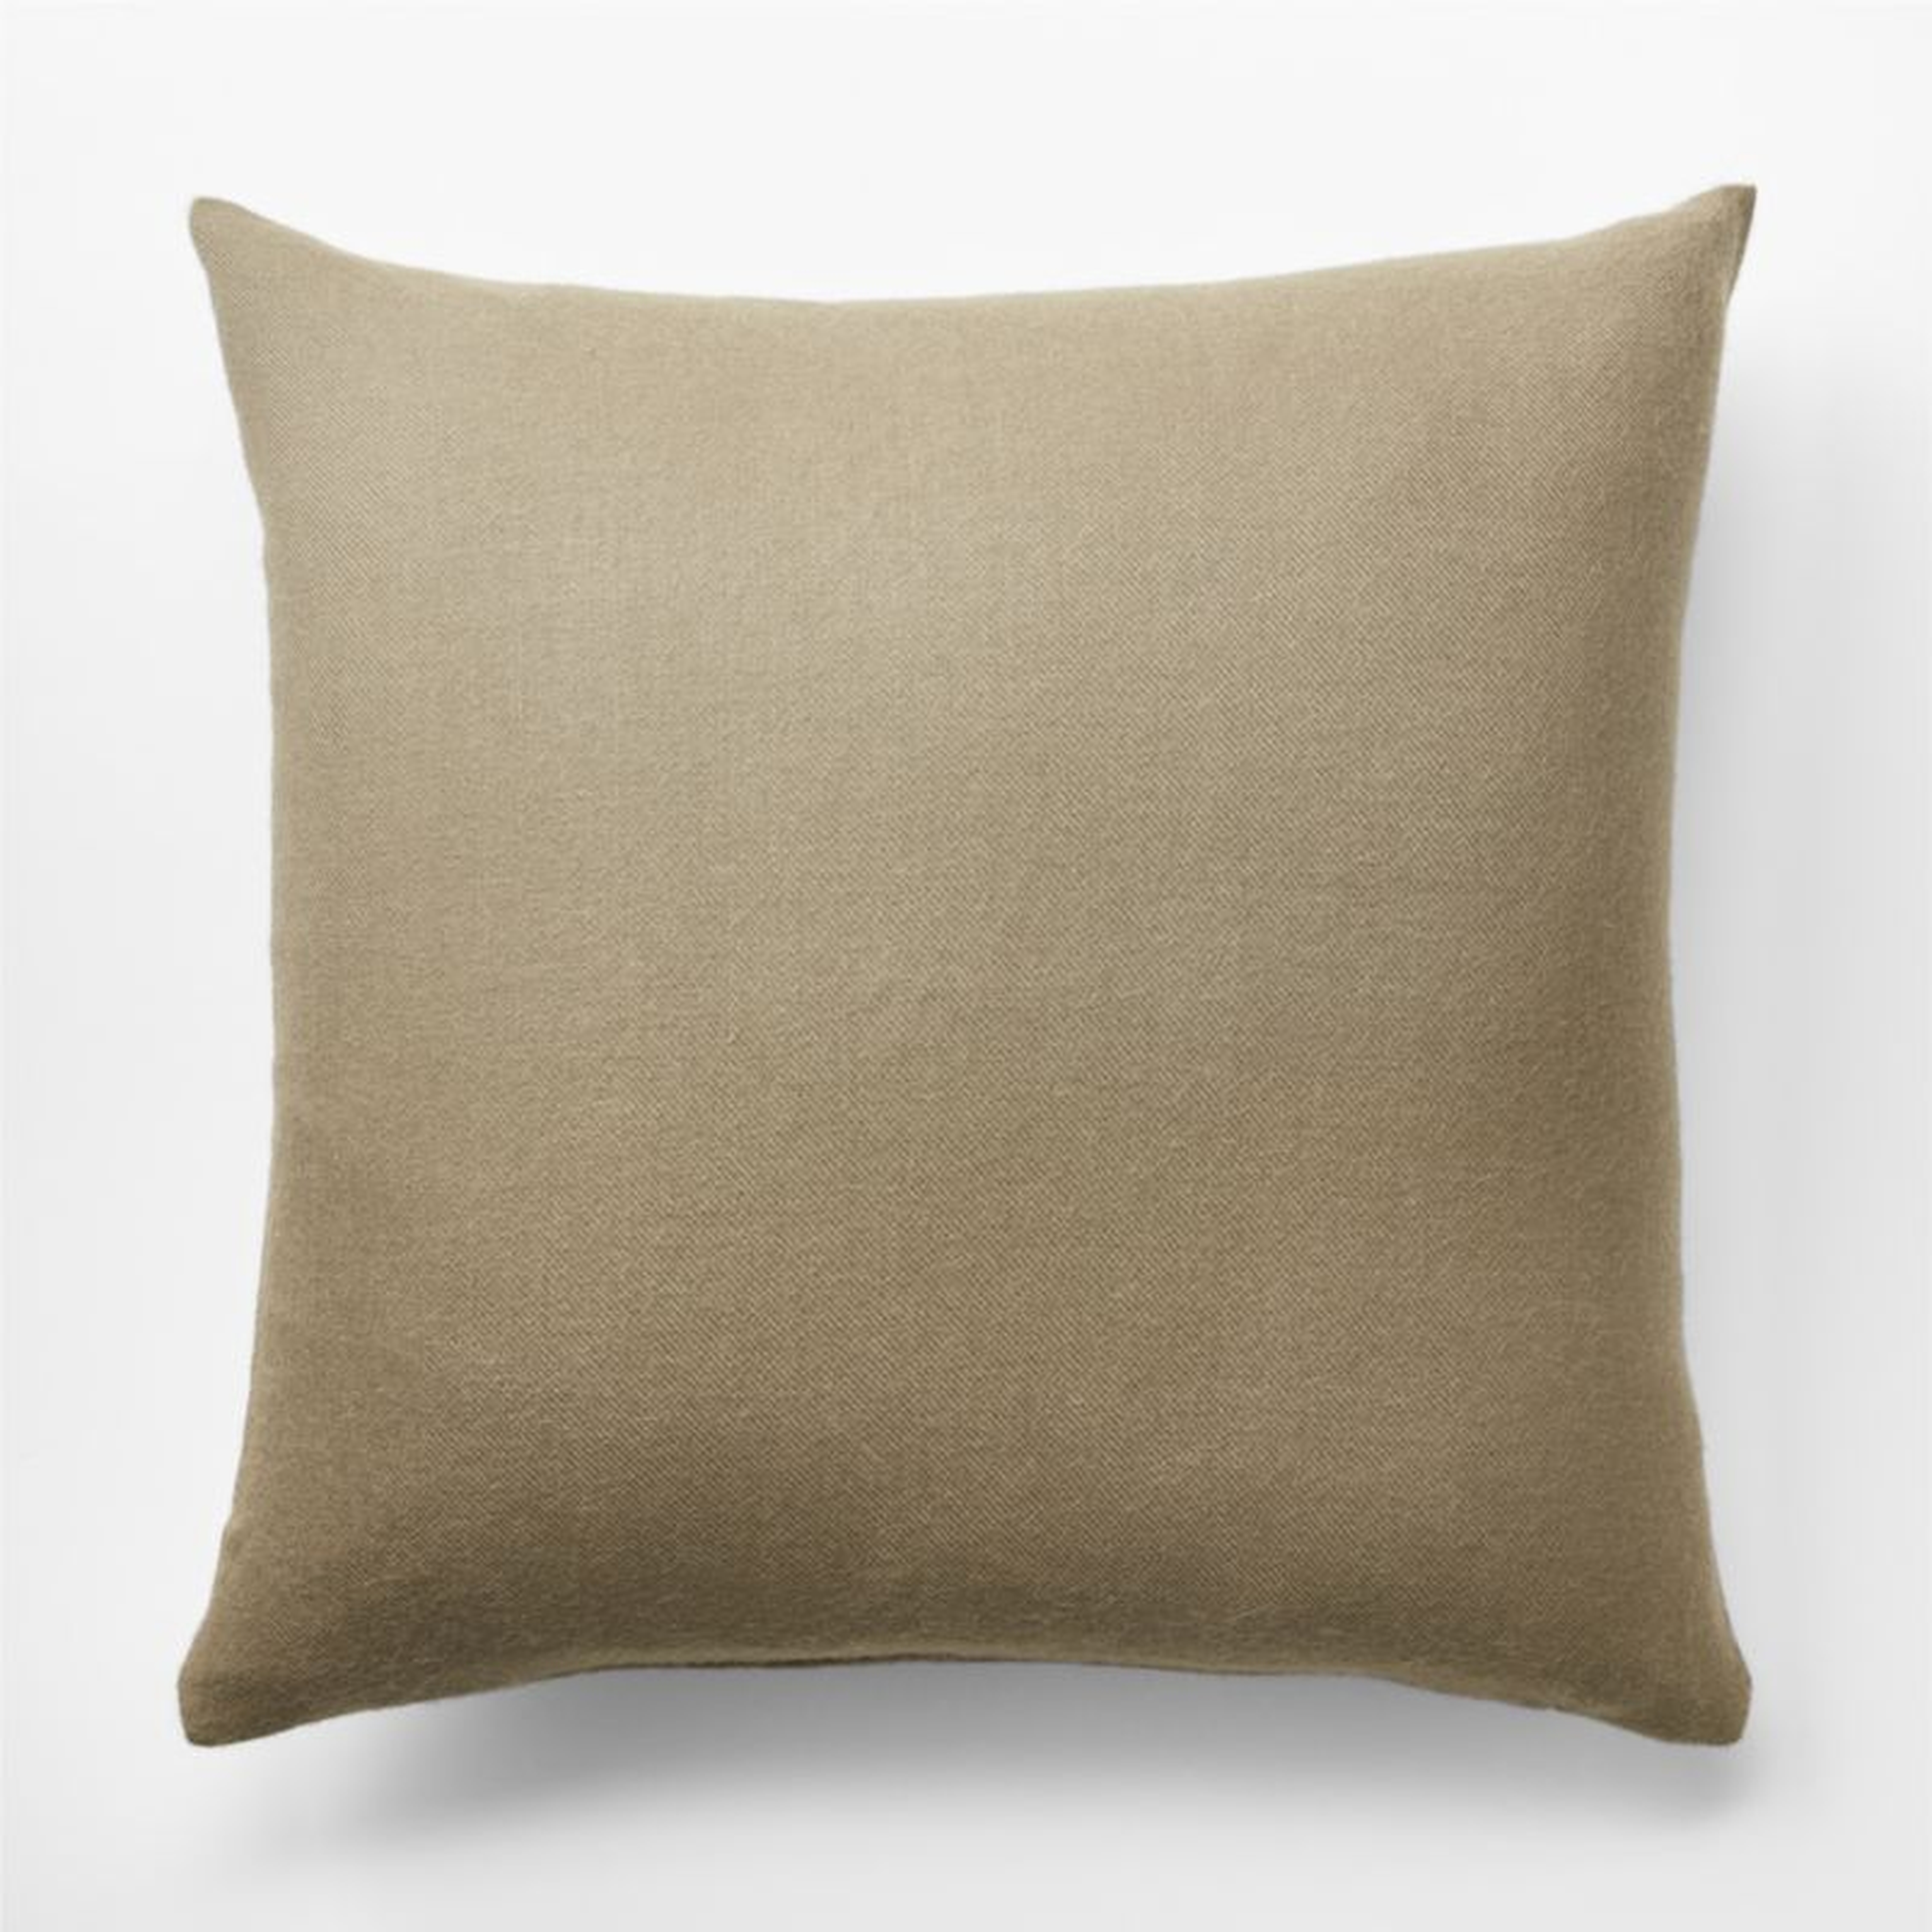 Alpaca Pillow with Down-Alternative Insert, Olive, 20" x 20" - CB2